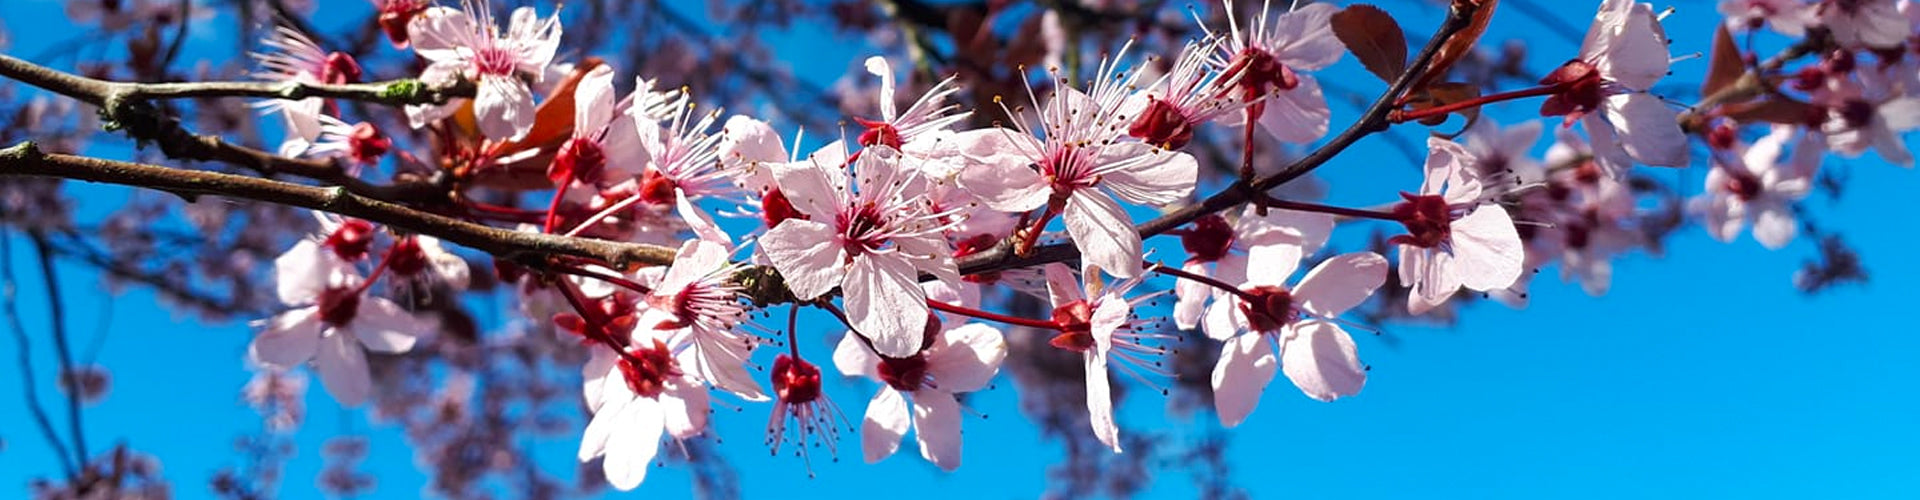 Close up image of Apple Blossom